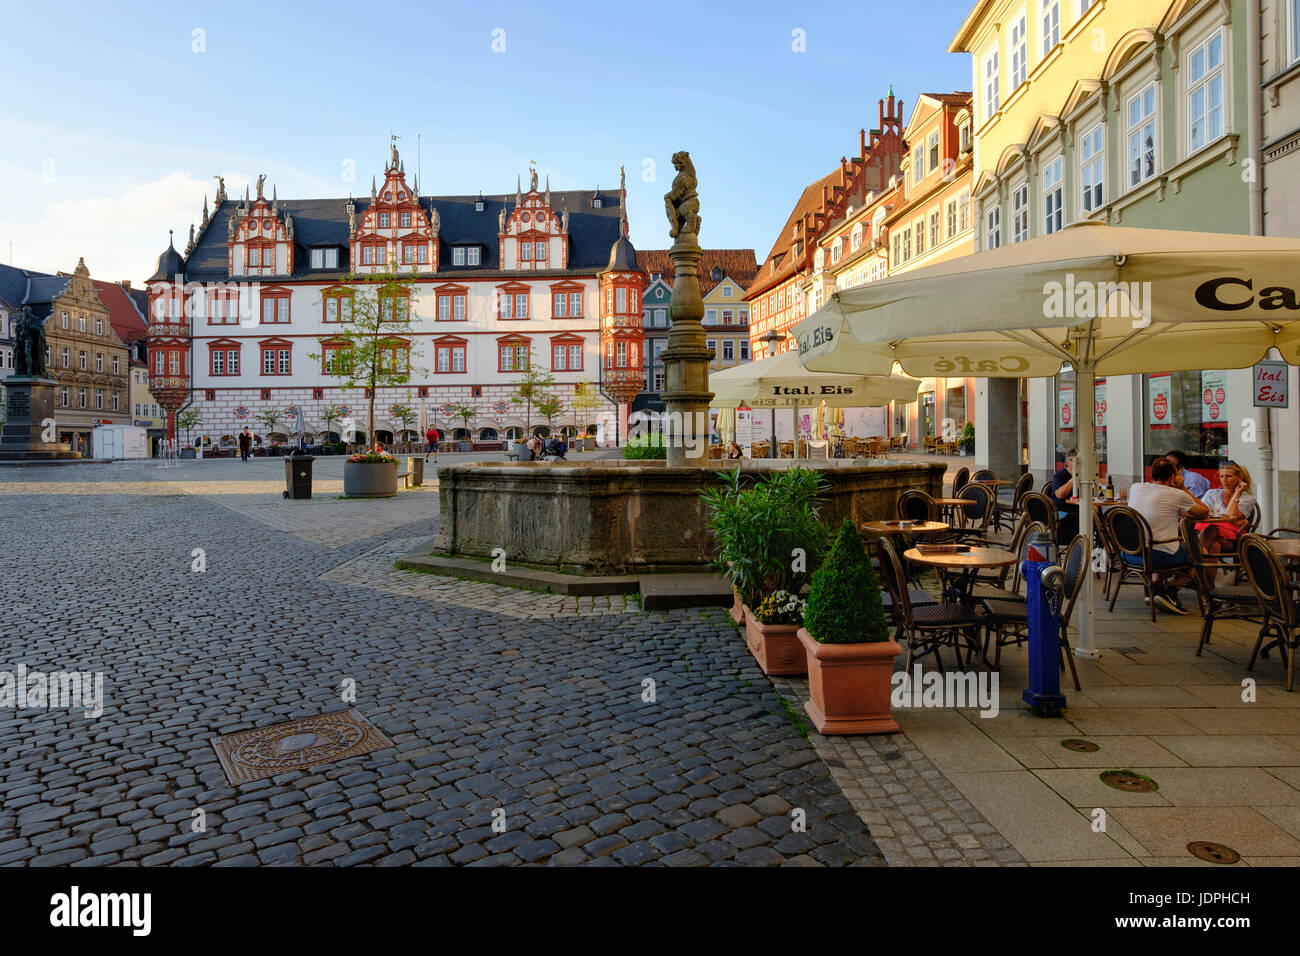 Spengler's fountain and Coburg Town Hall, Market Square, Coburg, Upper Franconia, Franconia, Bavaria, Germany Stock Photo